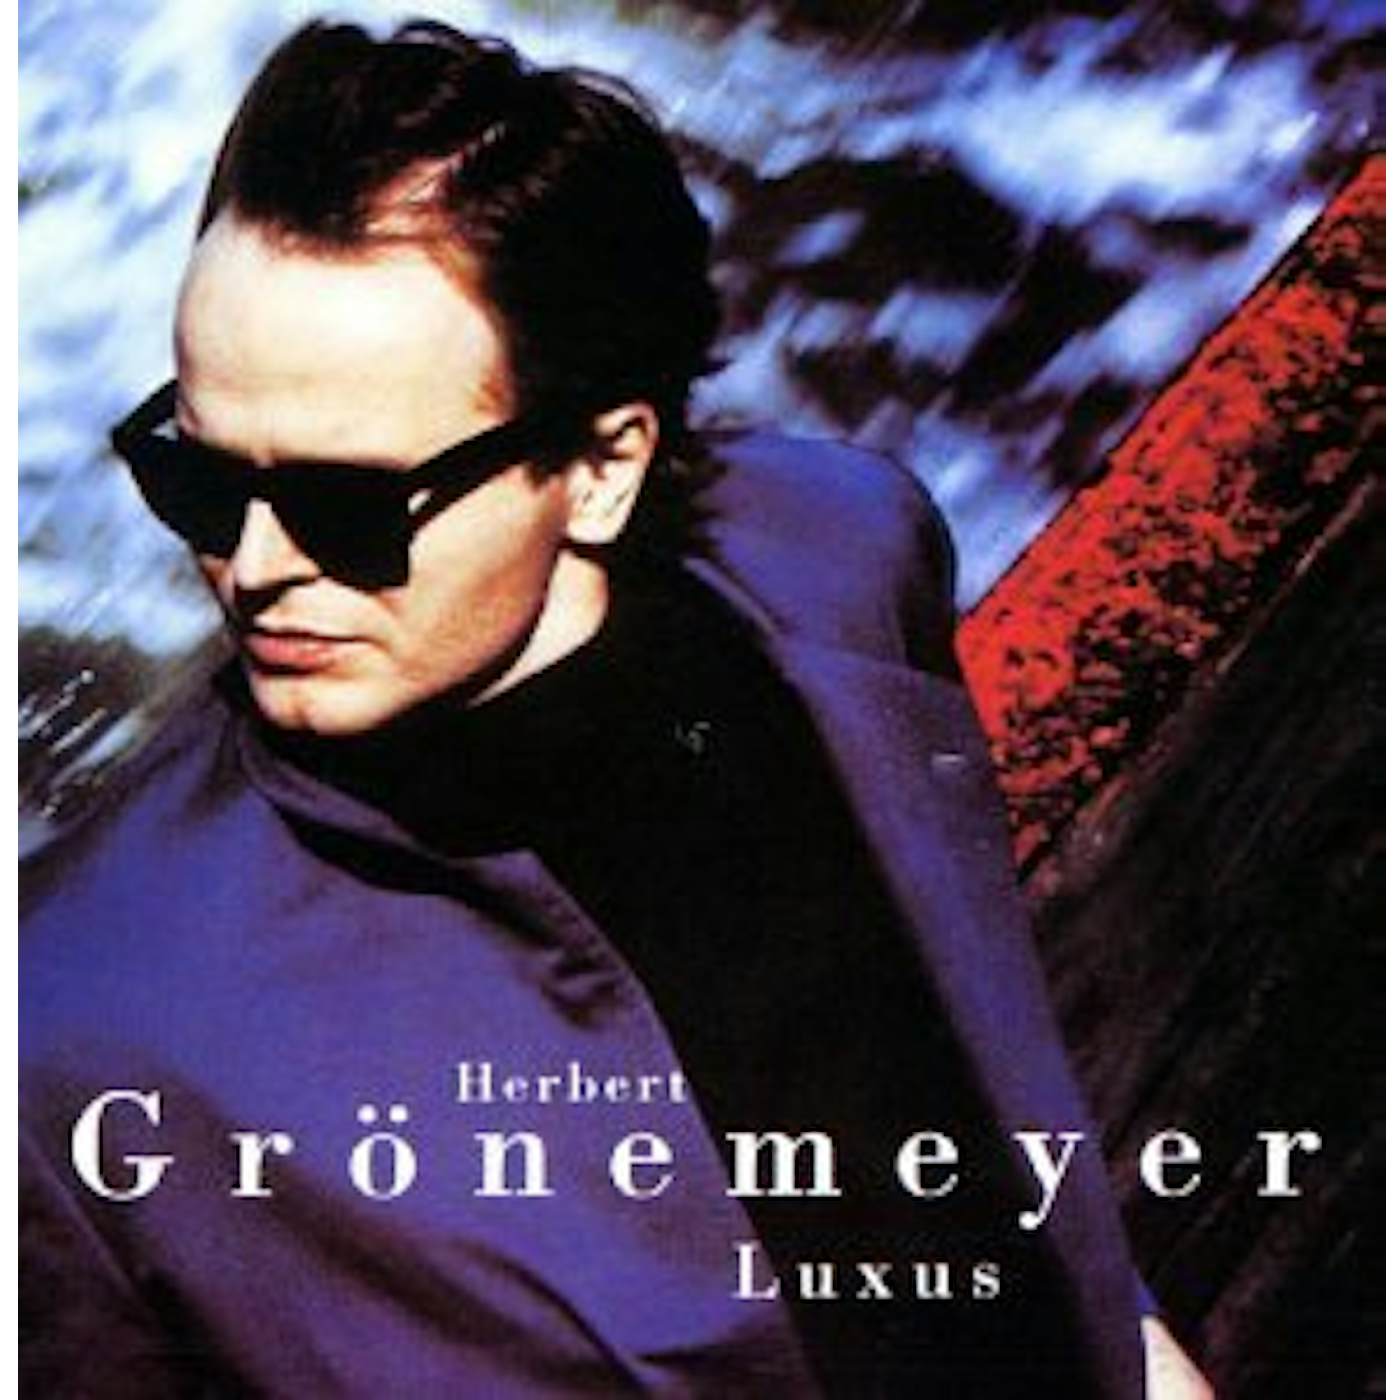 Herbert Grönemeyer LUXUS CD